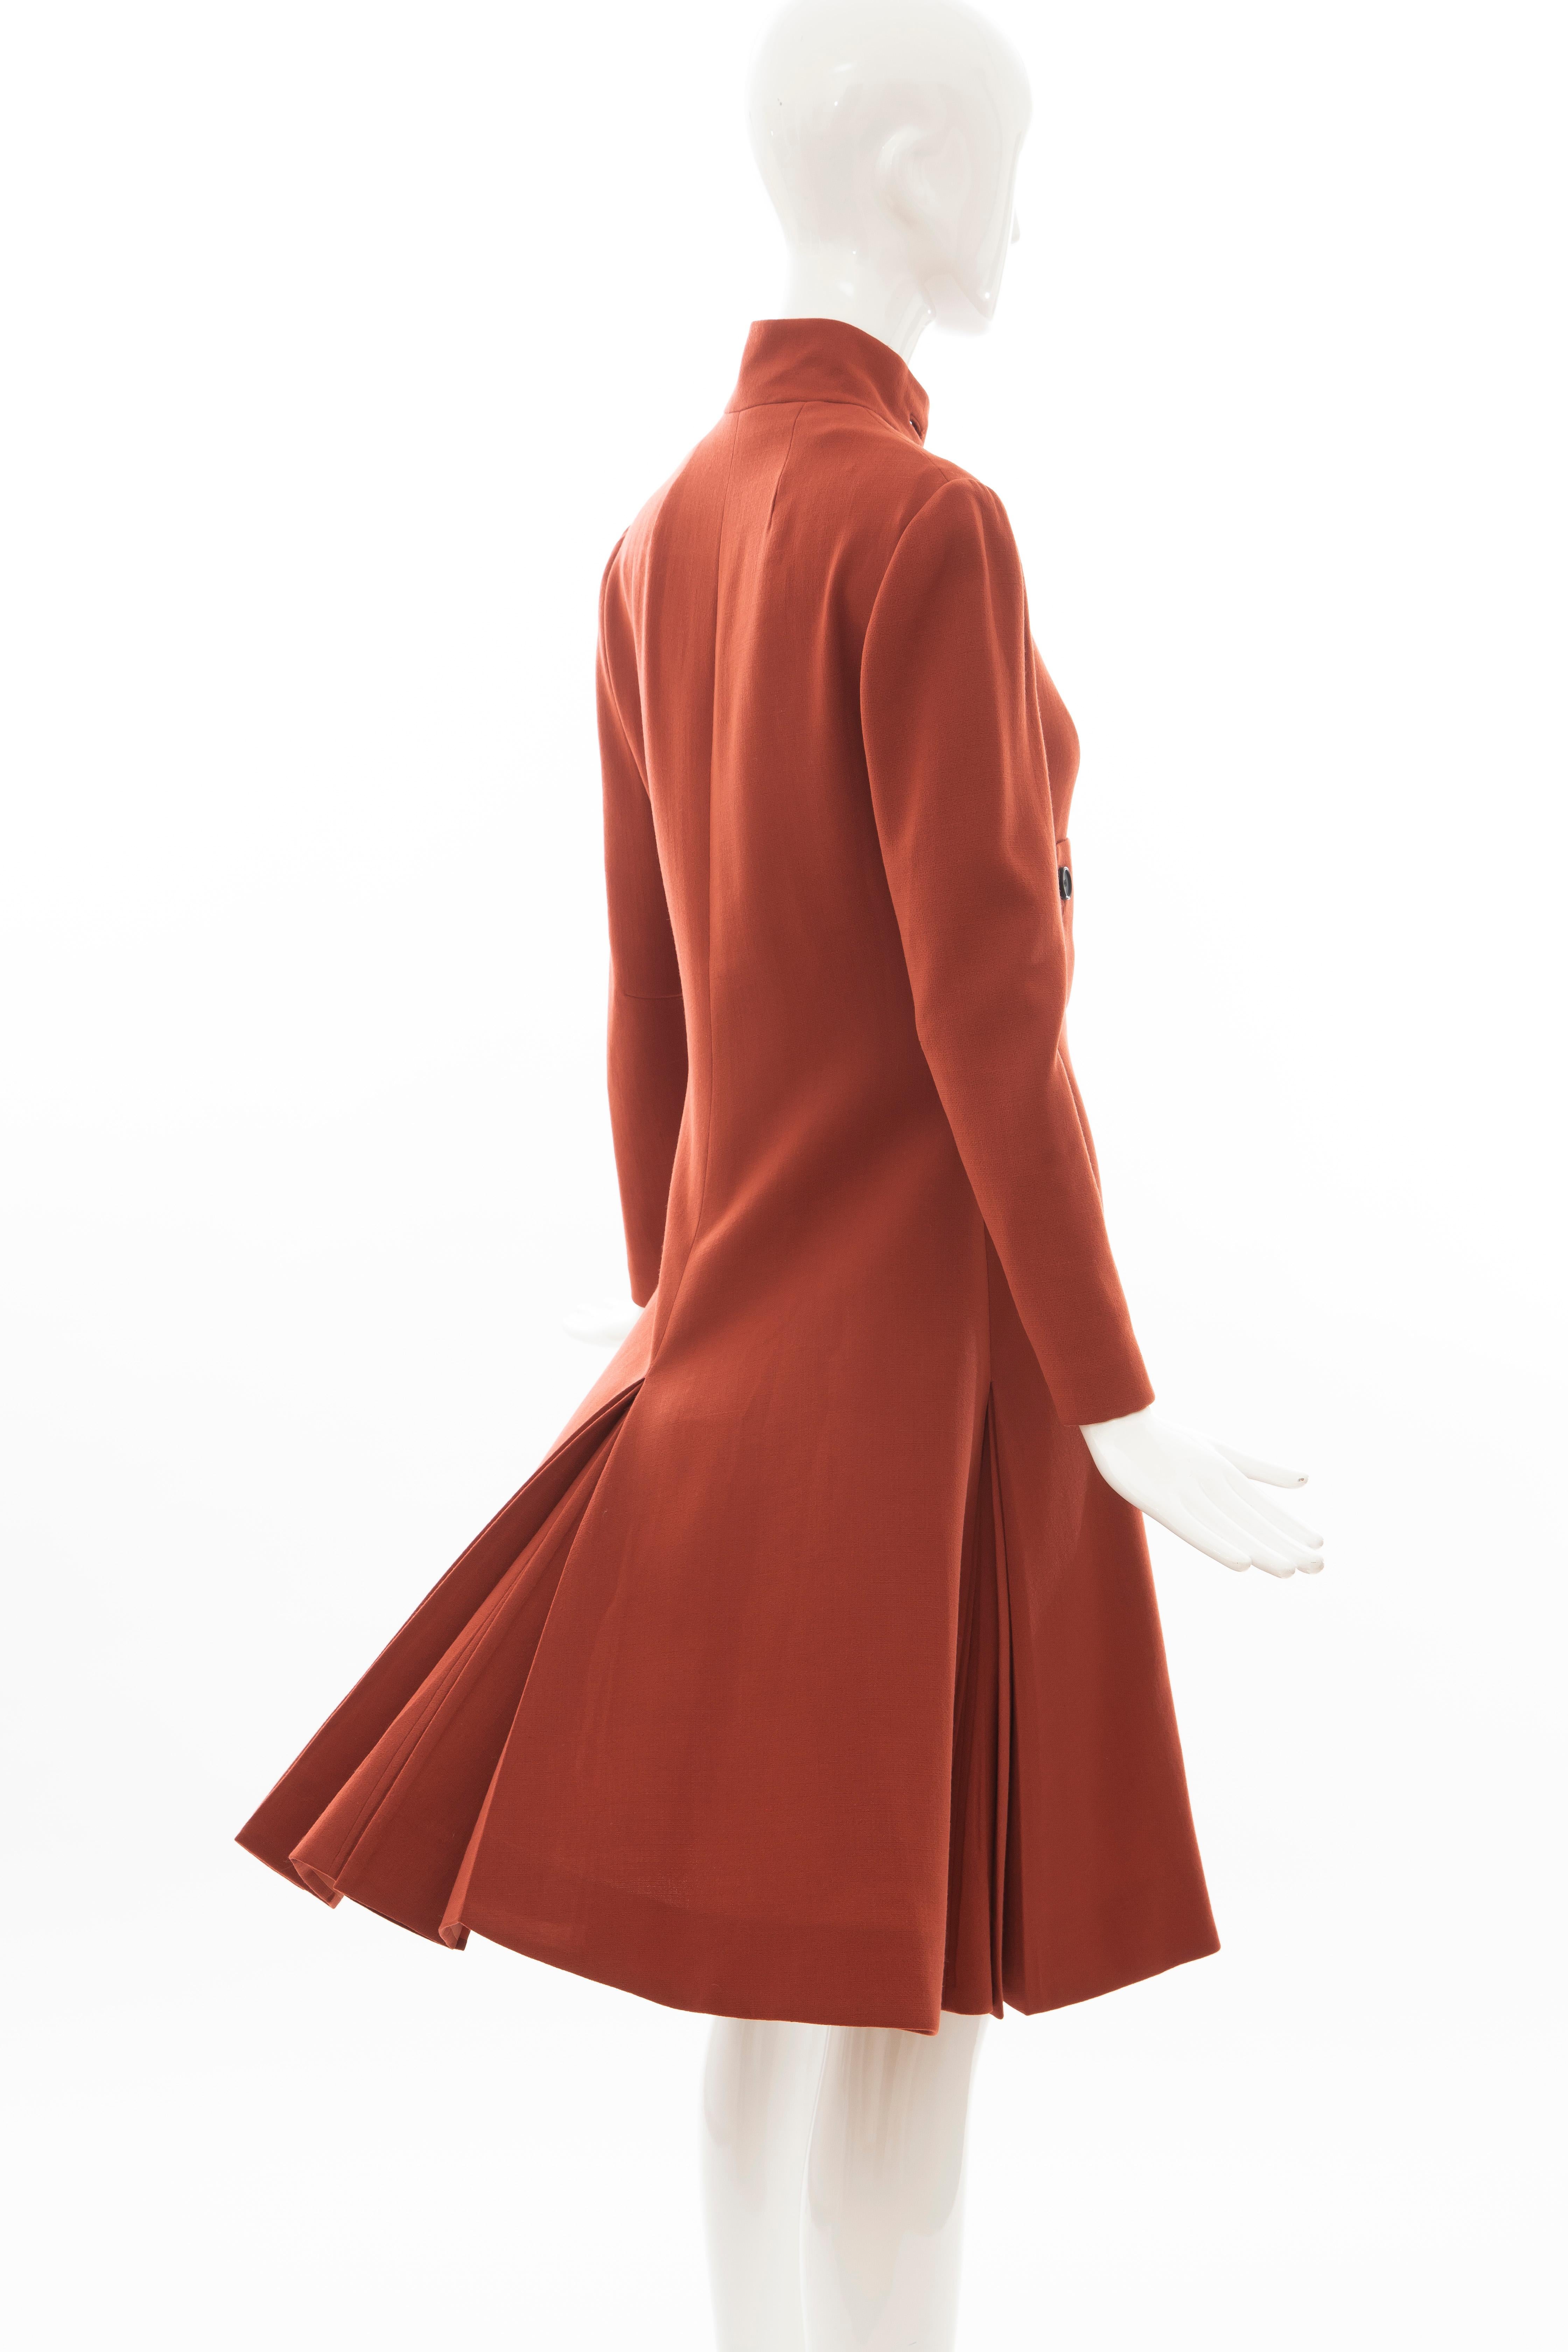 Geoffrey Beene Cinnamon Wool Crepe Princess Cut Dress, Circa: 1960's In Good Condition For Sale In Cincinnati, OH